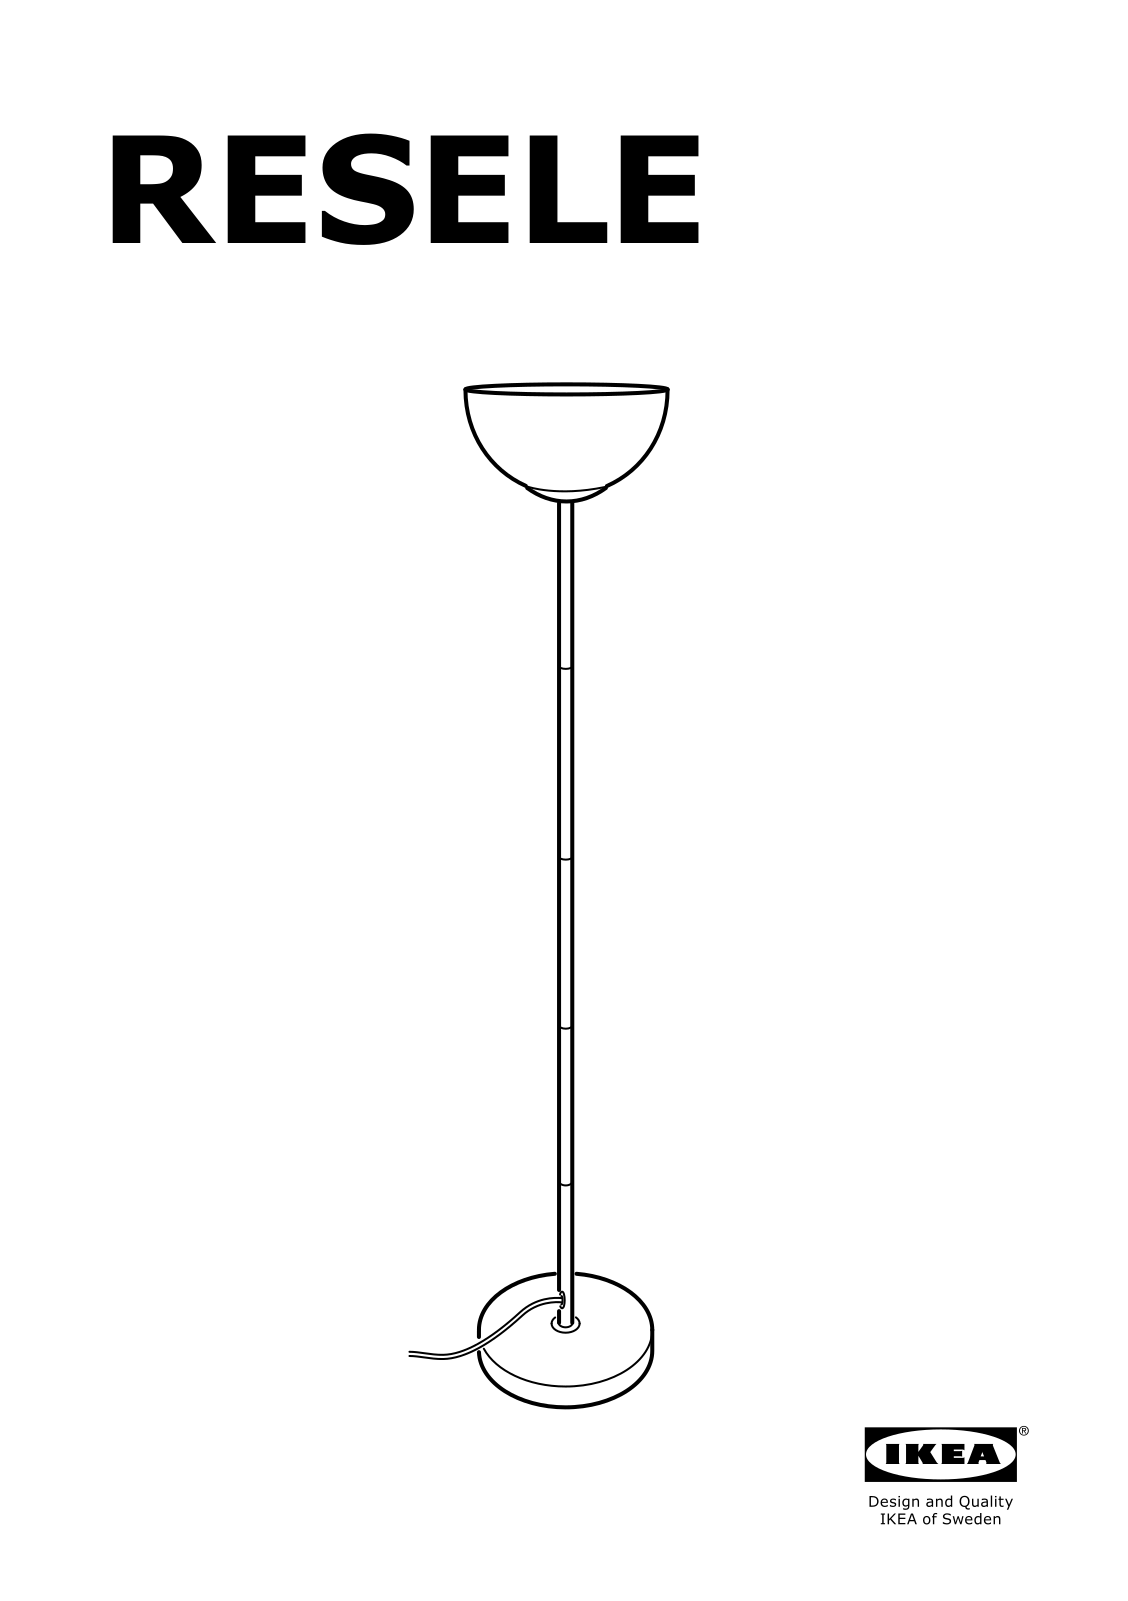 IKEA RESELE User Manual